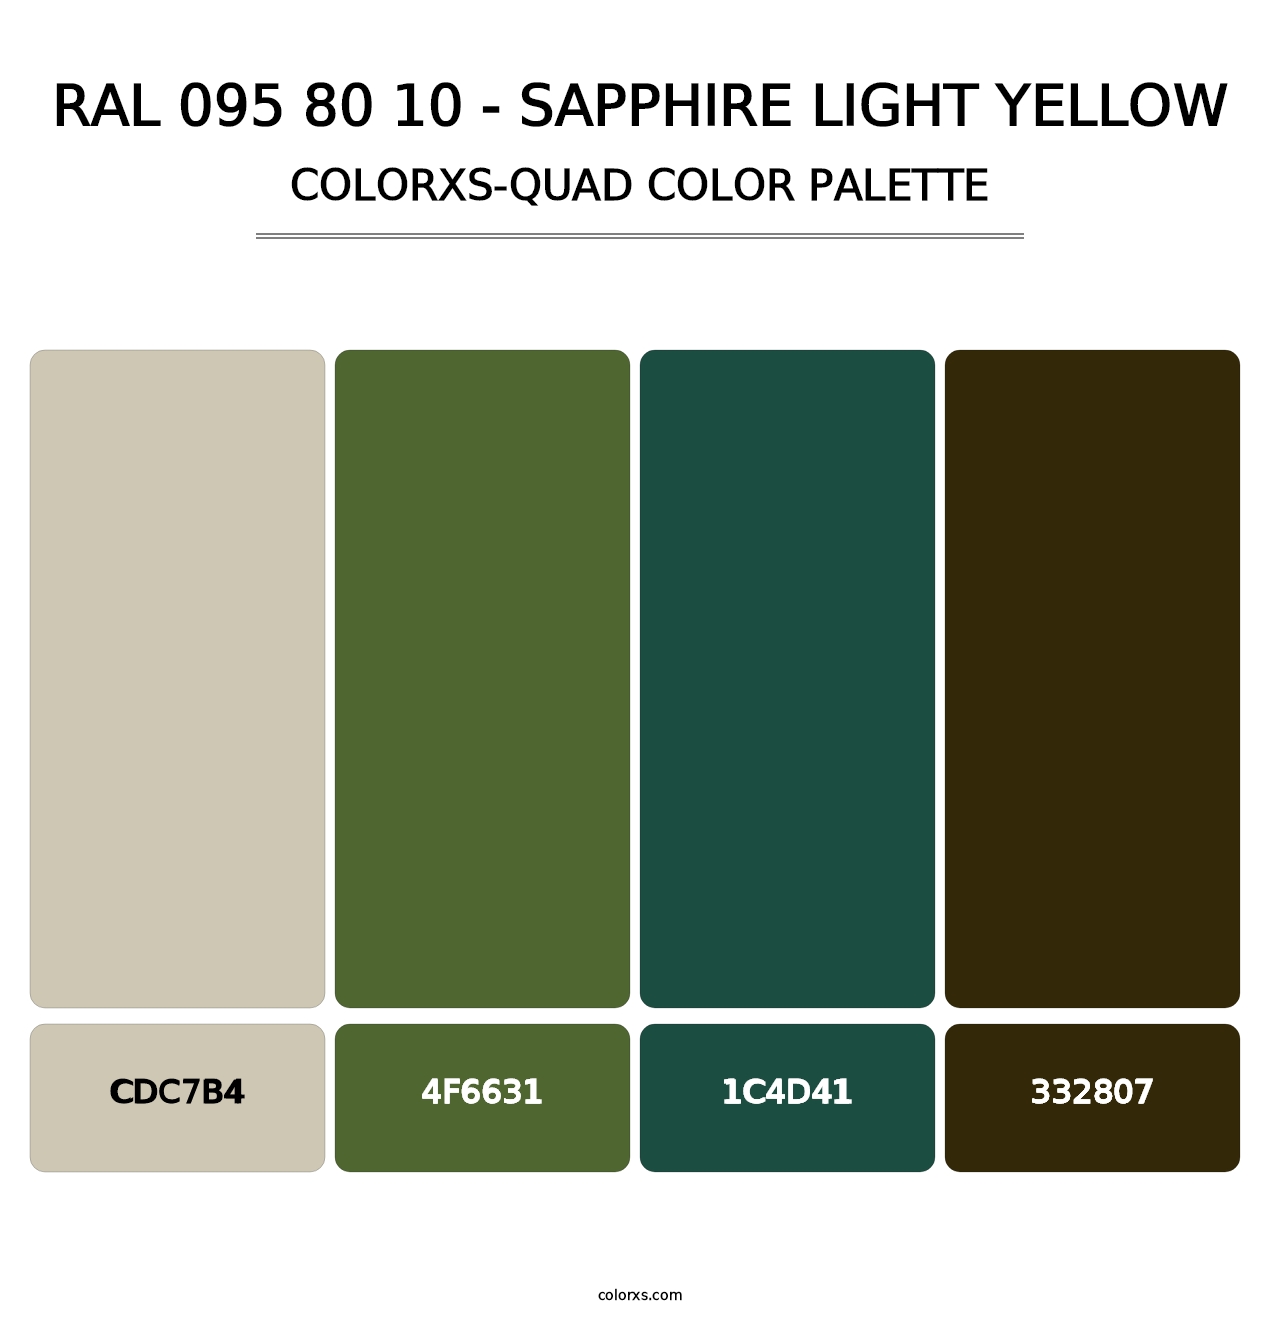 RAL 095 80 10 - Sapphire Light Yellow - Colorxs Quad Palette